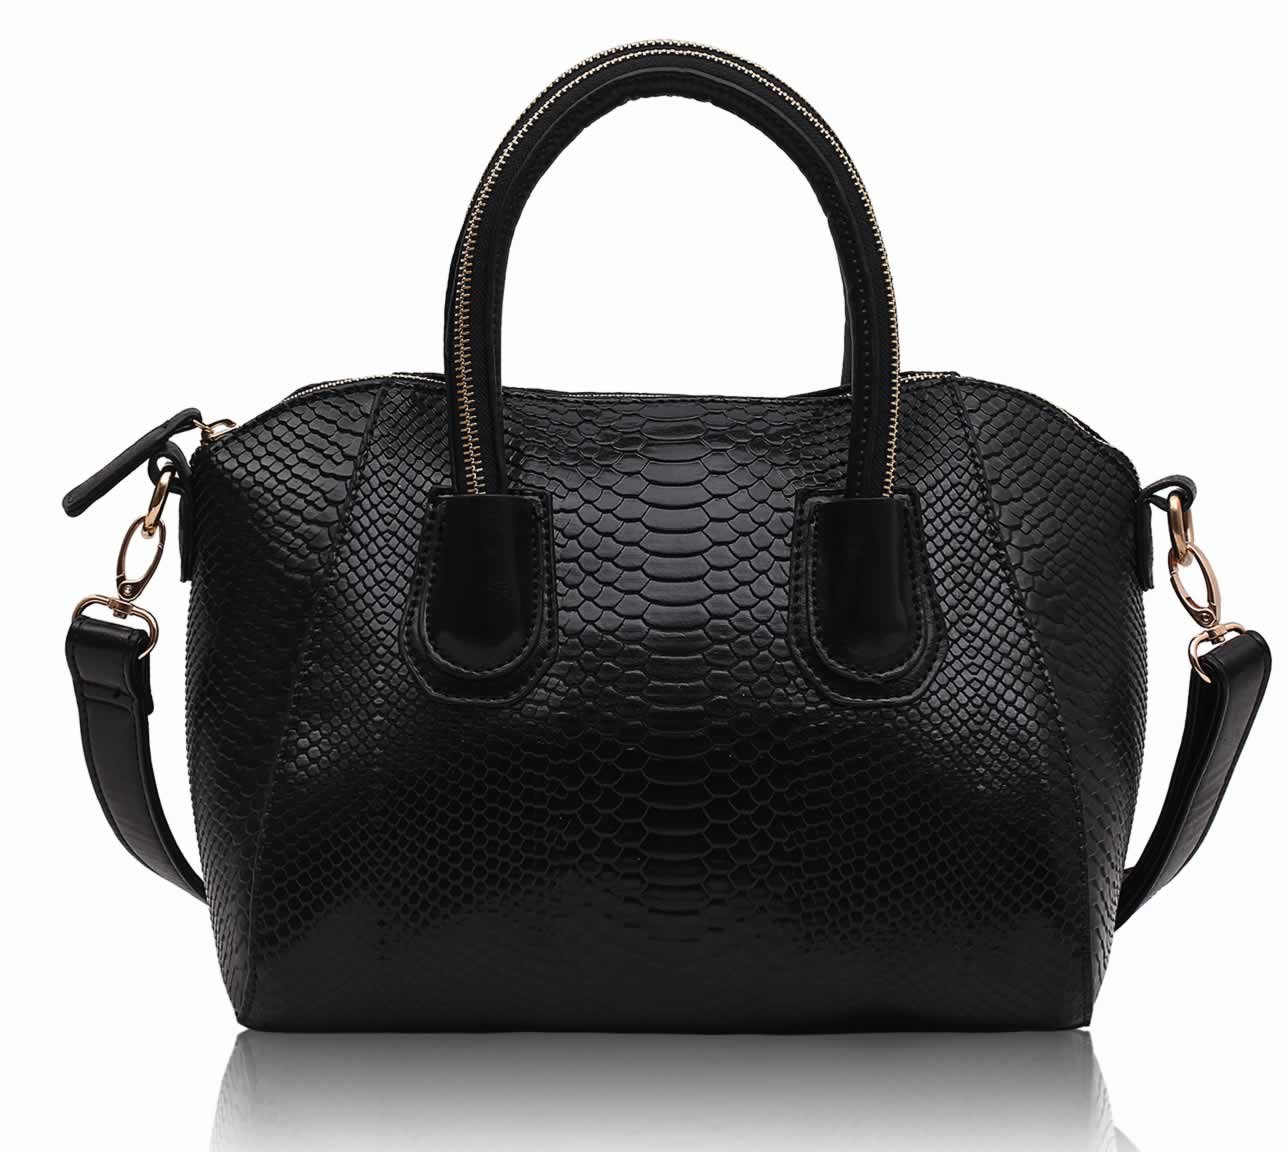 Wholesale Bags :: LS0049 - Black Snake Skin Effect Fashion Handbag ...